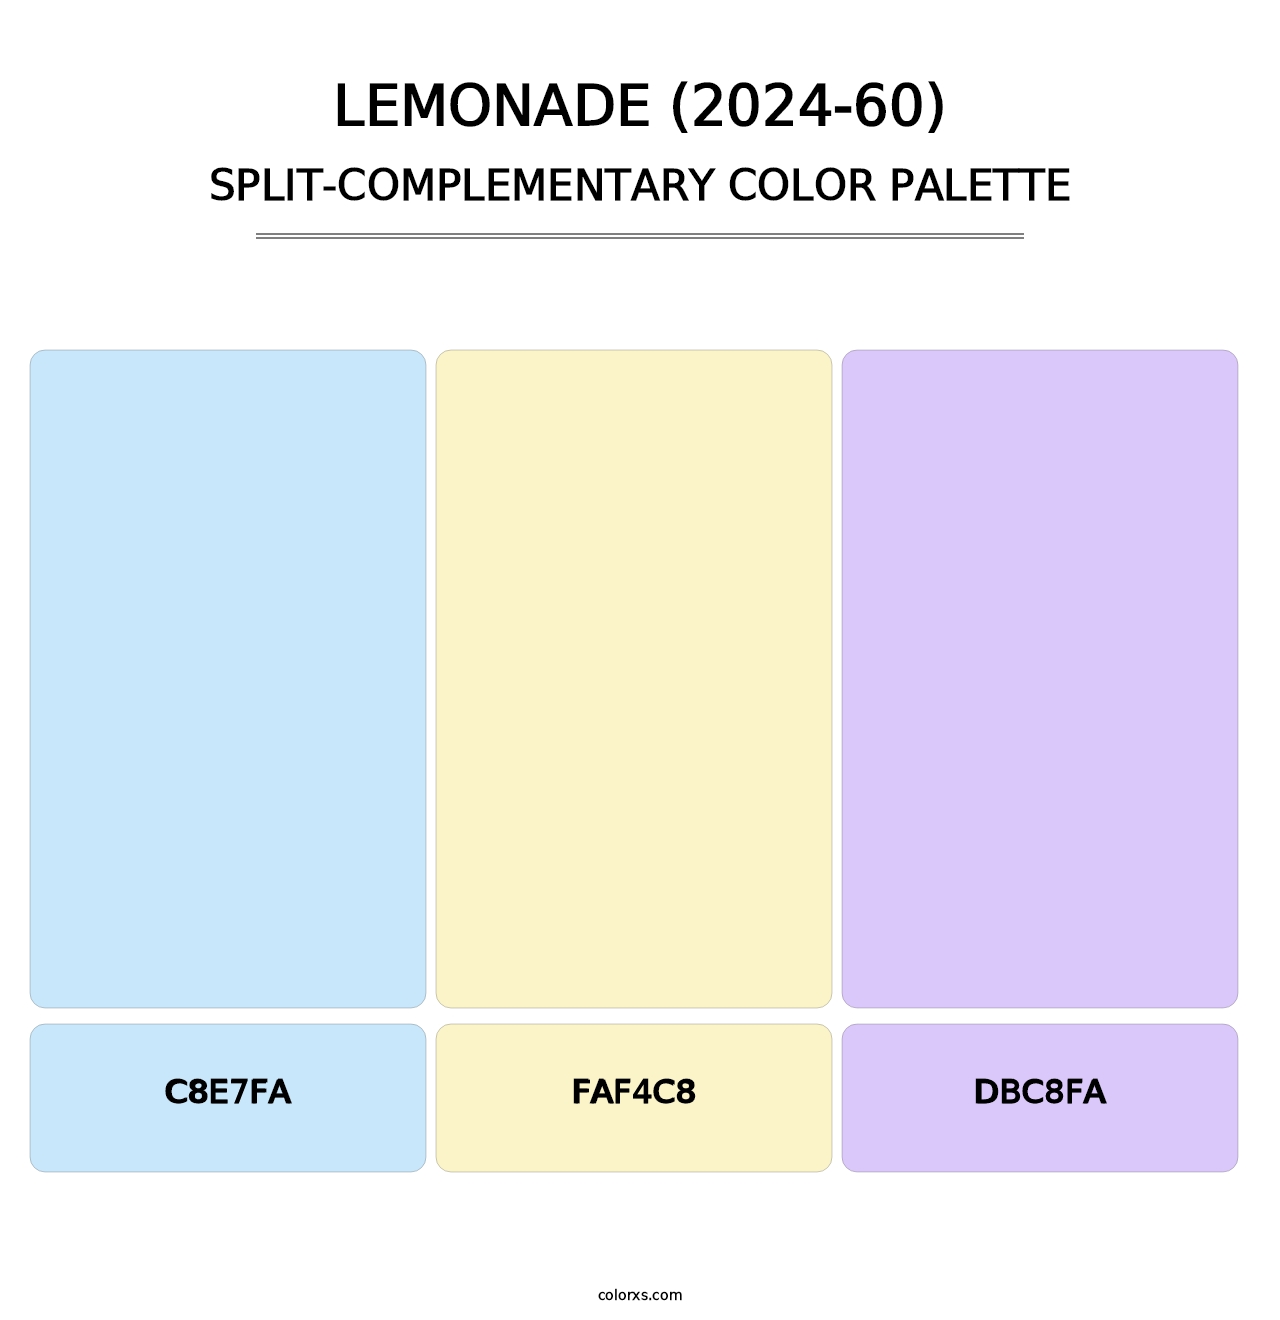 Lemonade (2024-60) - Split-Complementary Color Palette